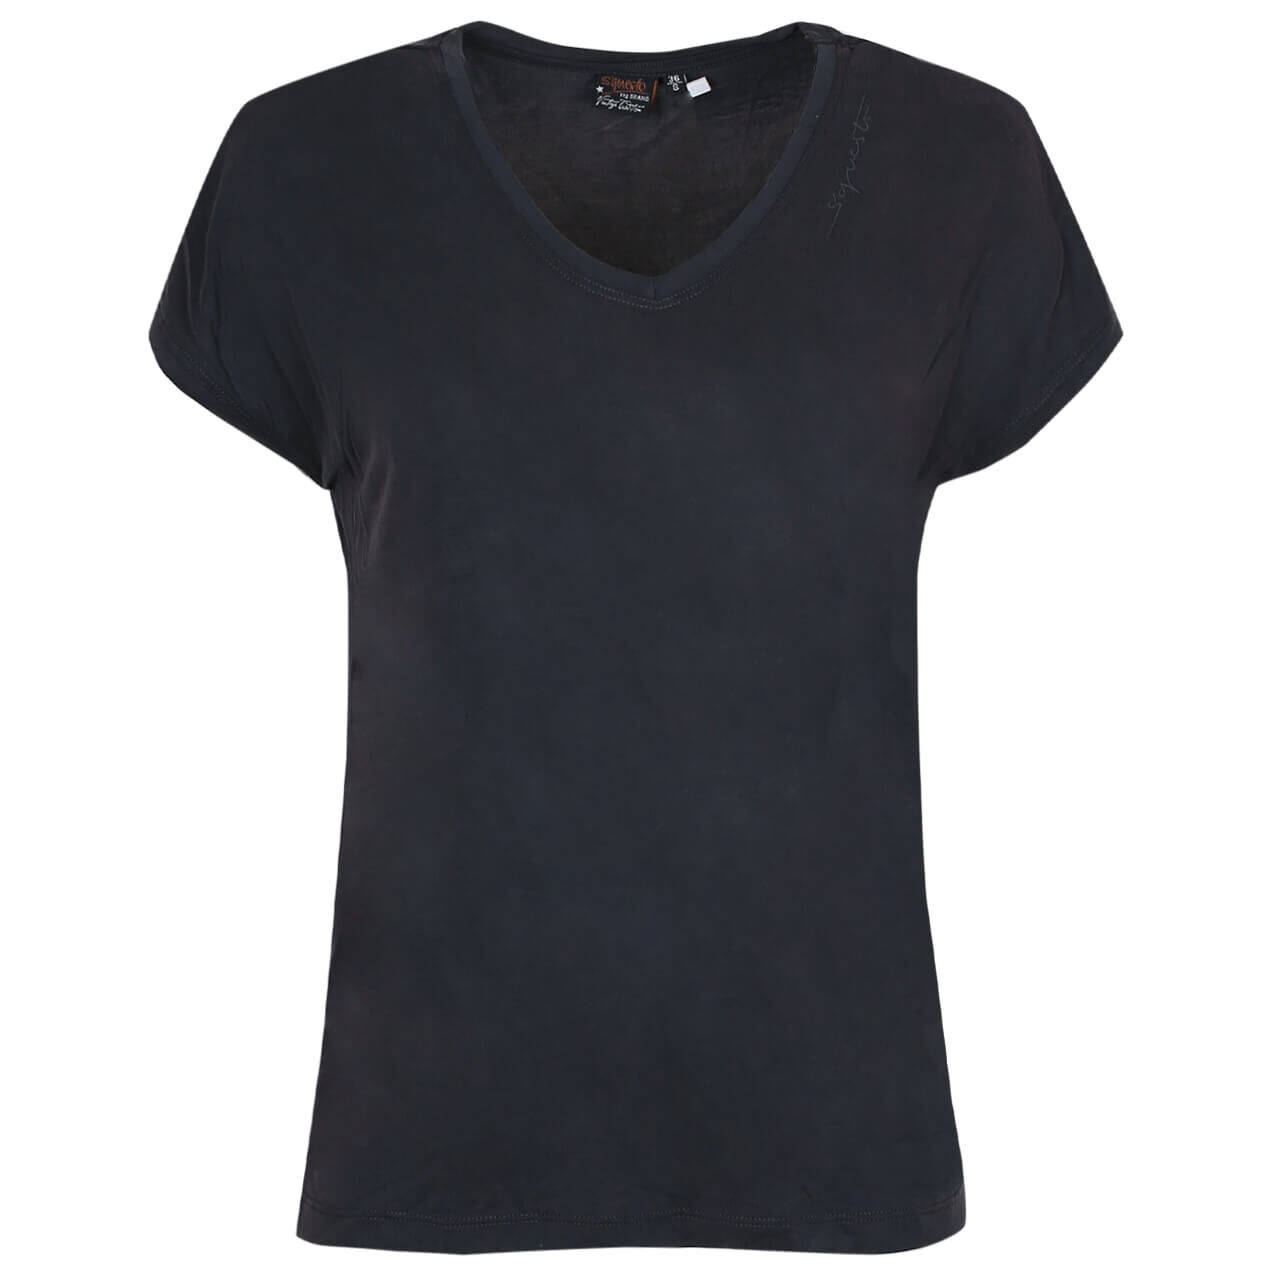 Soquesto Basic T-Shirt für Damen in Dunkelgrau, FarbNr.: 2860